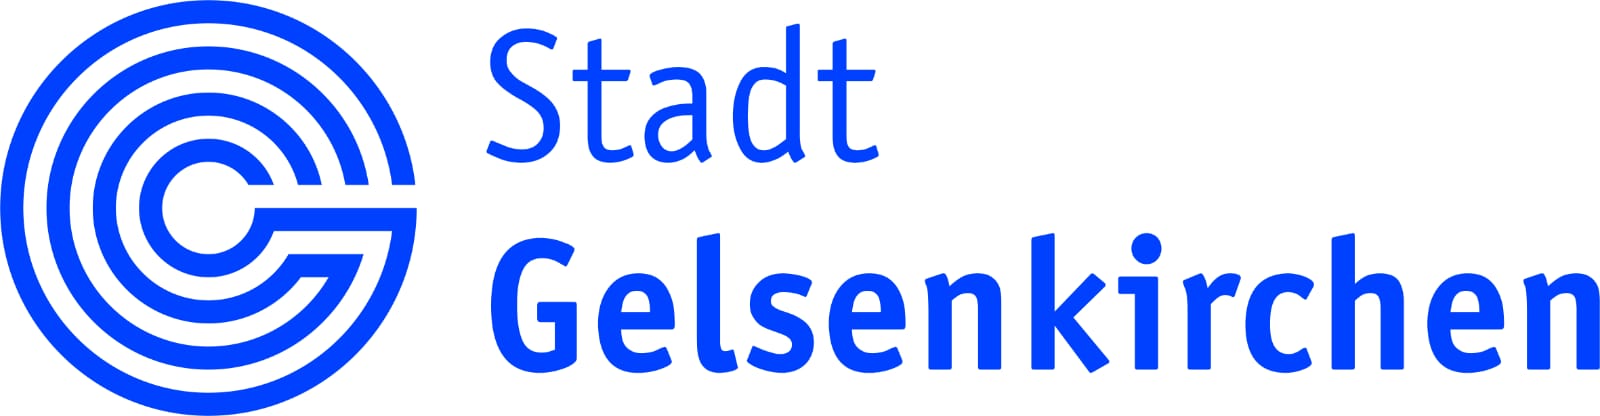 Logo der Stadt Gelsenkirchen